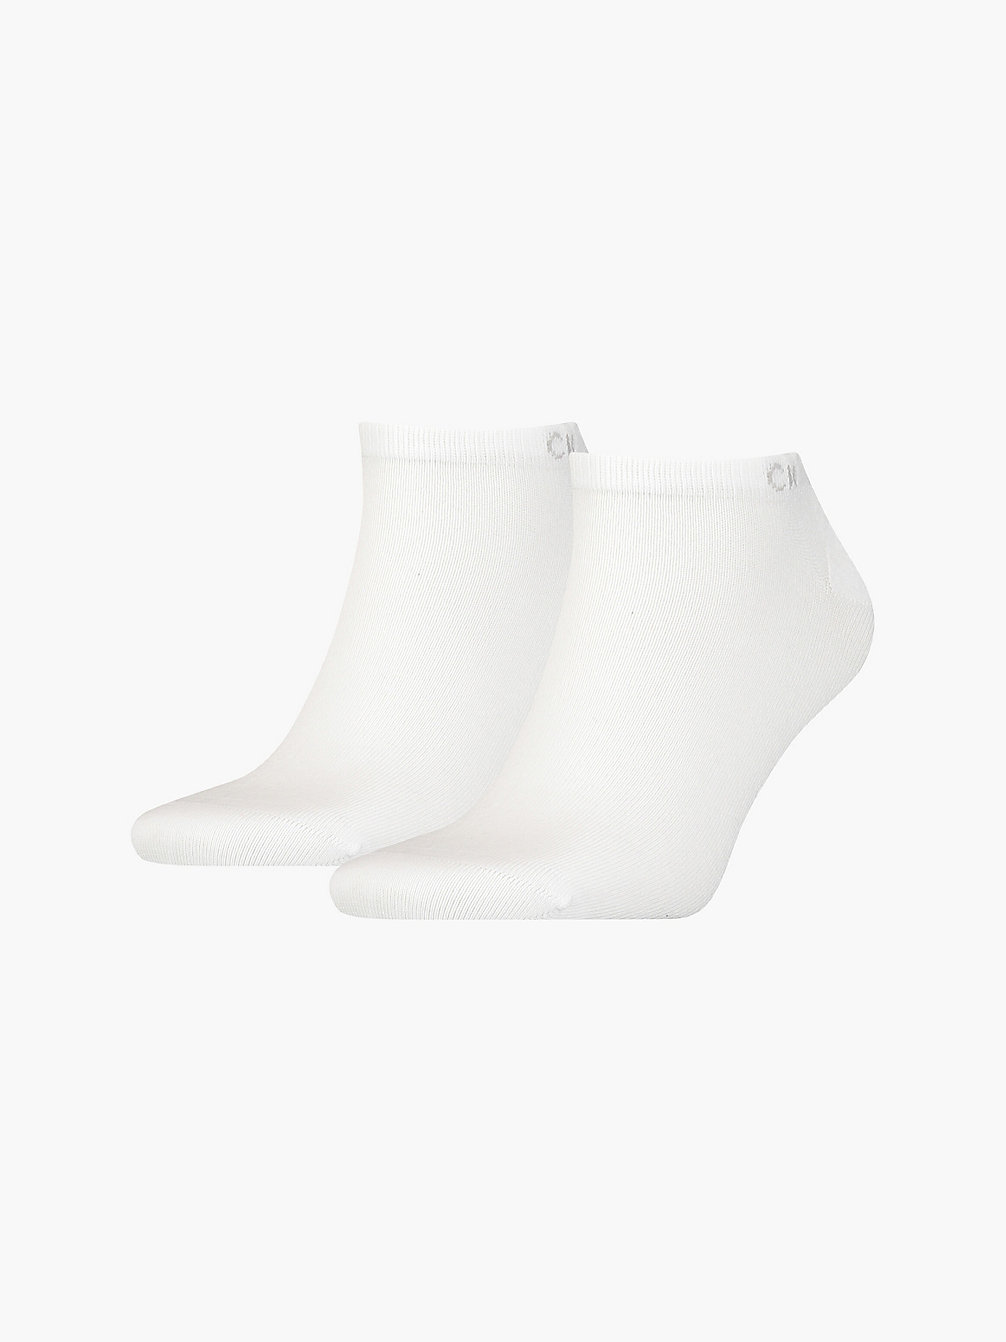 WHITE > Комплект носков-невидимок 2 пары > undefined женщины - Calvin Klein